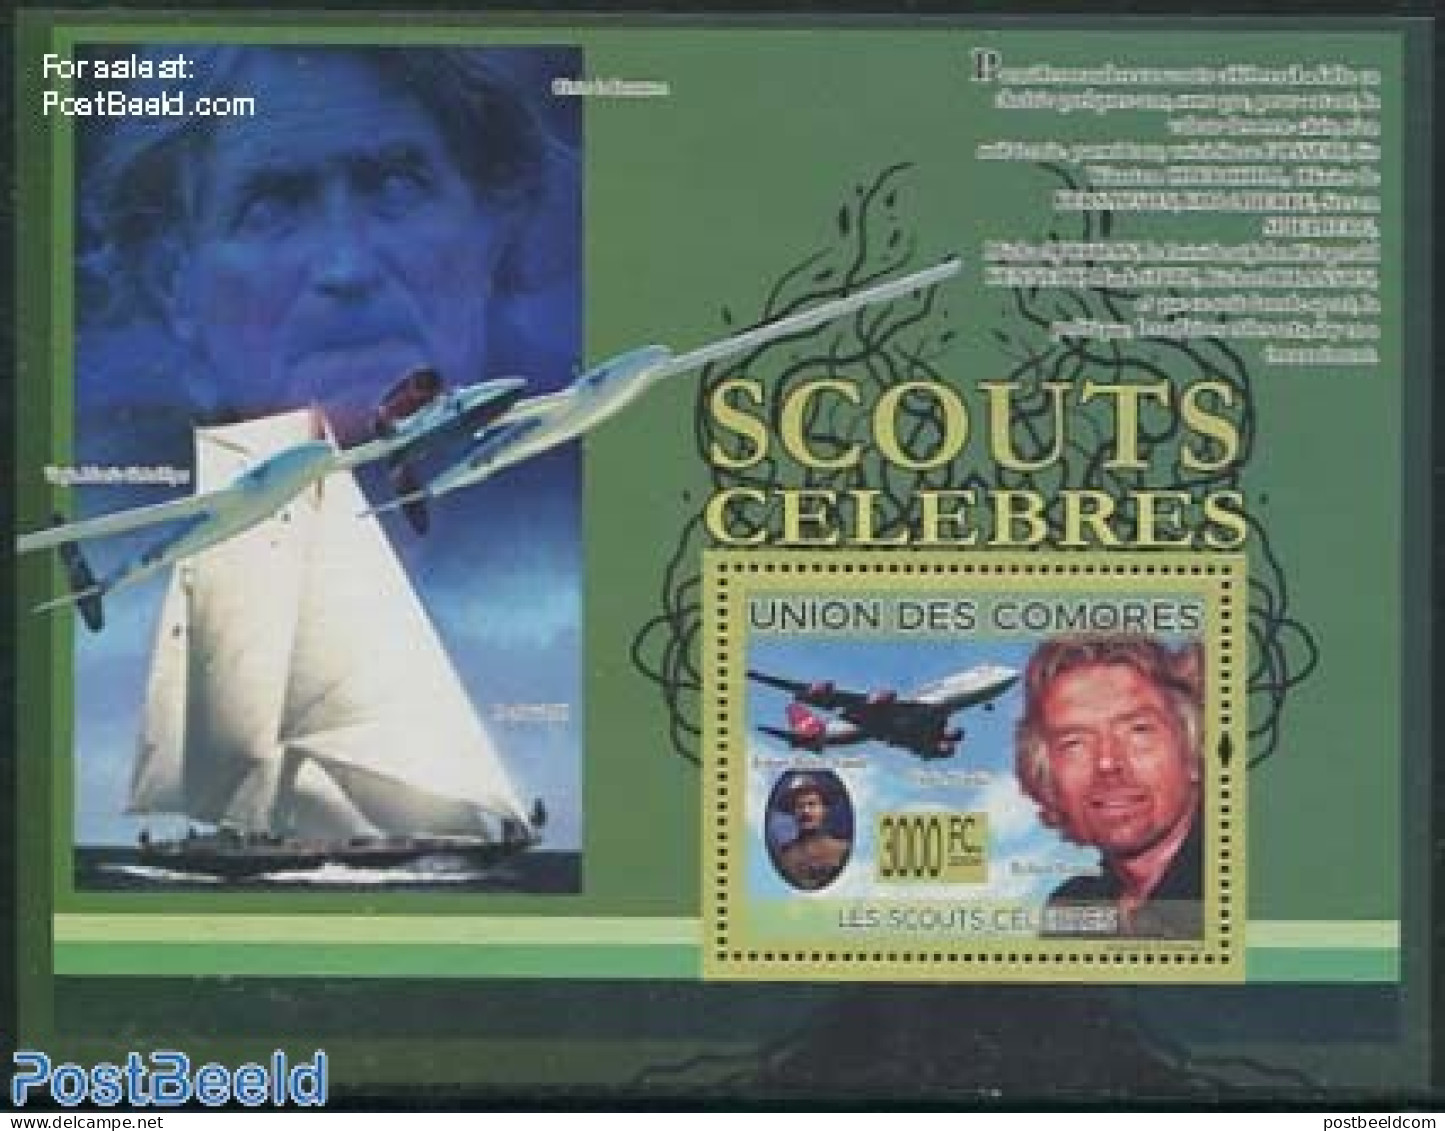 Comoros 2009 Famous Scouts, Richard Branson S/s, Mint NH, Sport - Transport - Sailing - Scouting - Aircraft & Aviation.. - Zeilen